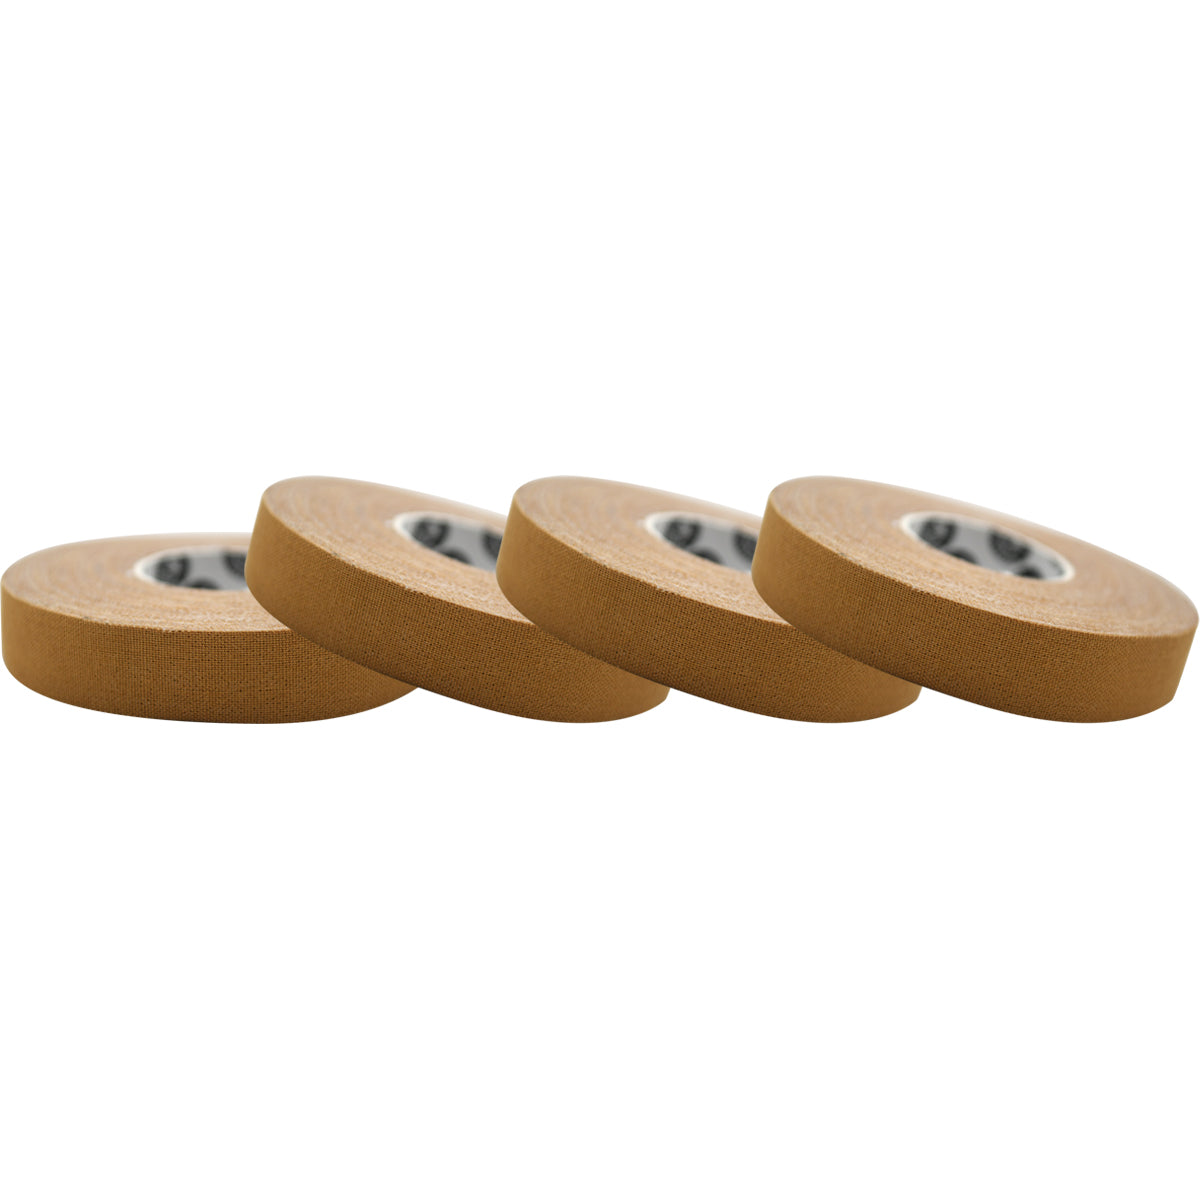 Monkey Tape 4-Pack (0.2”, 0.3”, 0.4”, or 0.5”) x 15yds Premium Jiu Jitsu Sports Athletic Finger Tape - for BJJ, Grappling, Crossfit, MMA, & Judo